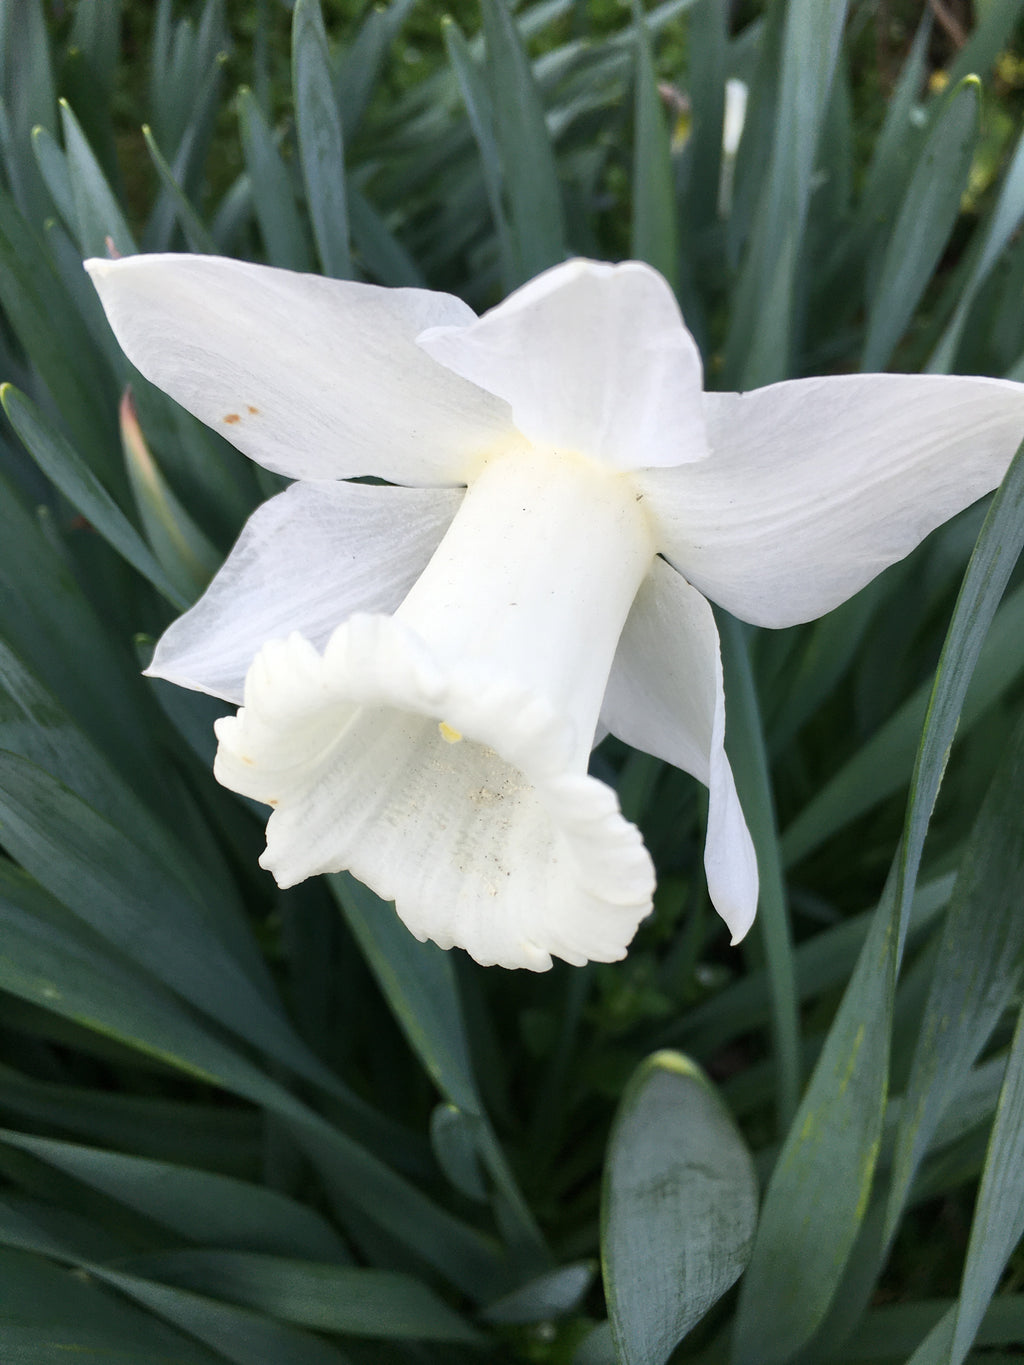 White Daffodil 'Mount Hood' Bulbs (Narcissus) Free UK Postage